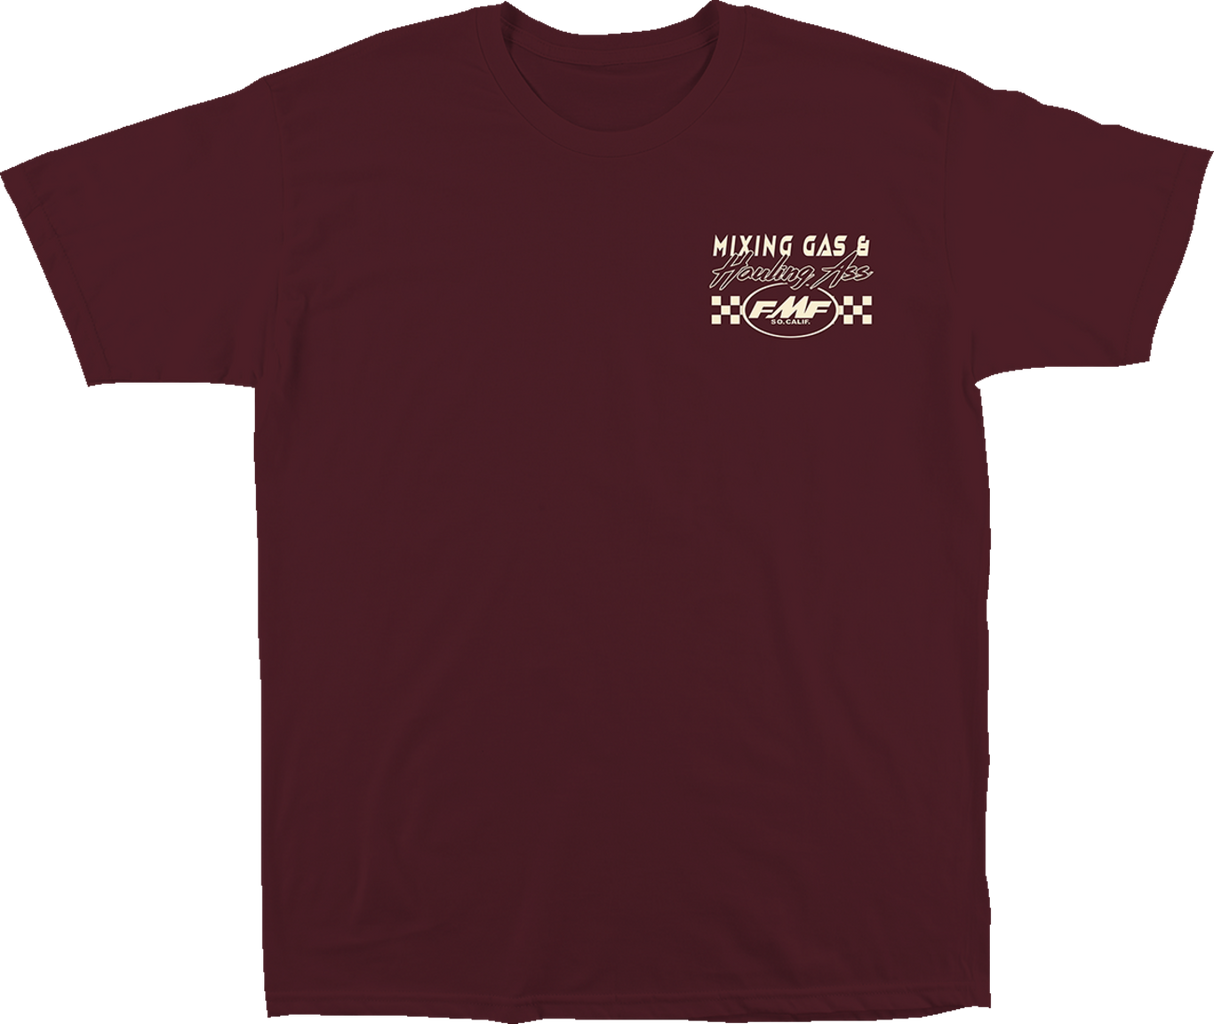 FMF Iconic T-Shirt - Maroon - Small FA23118910MARSM